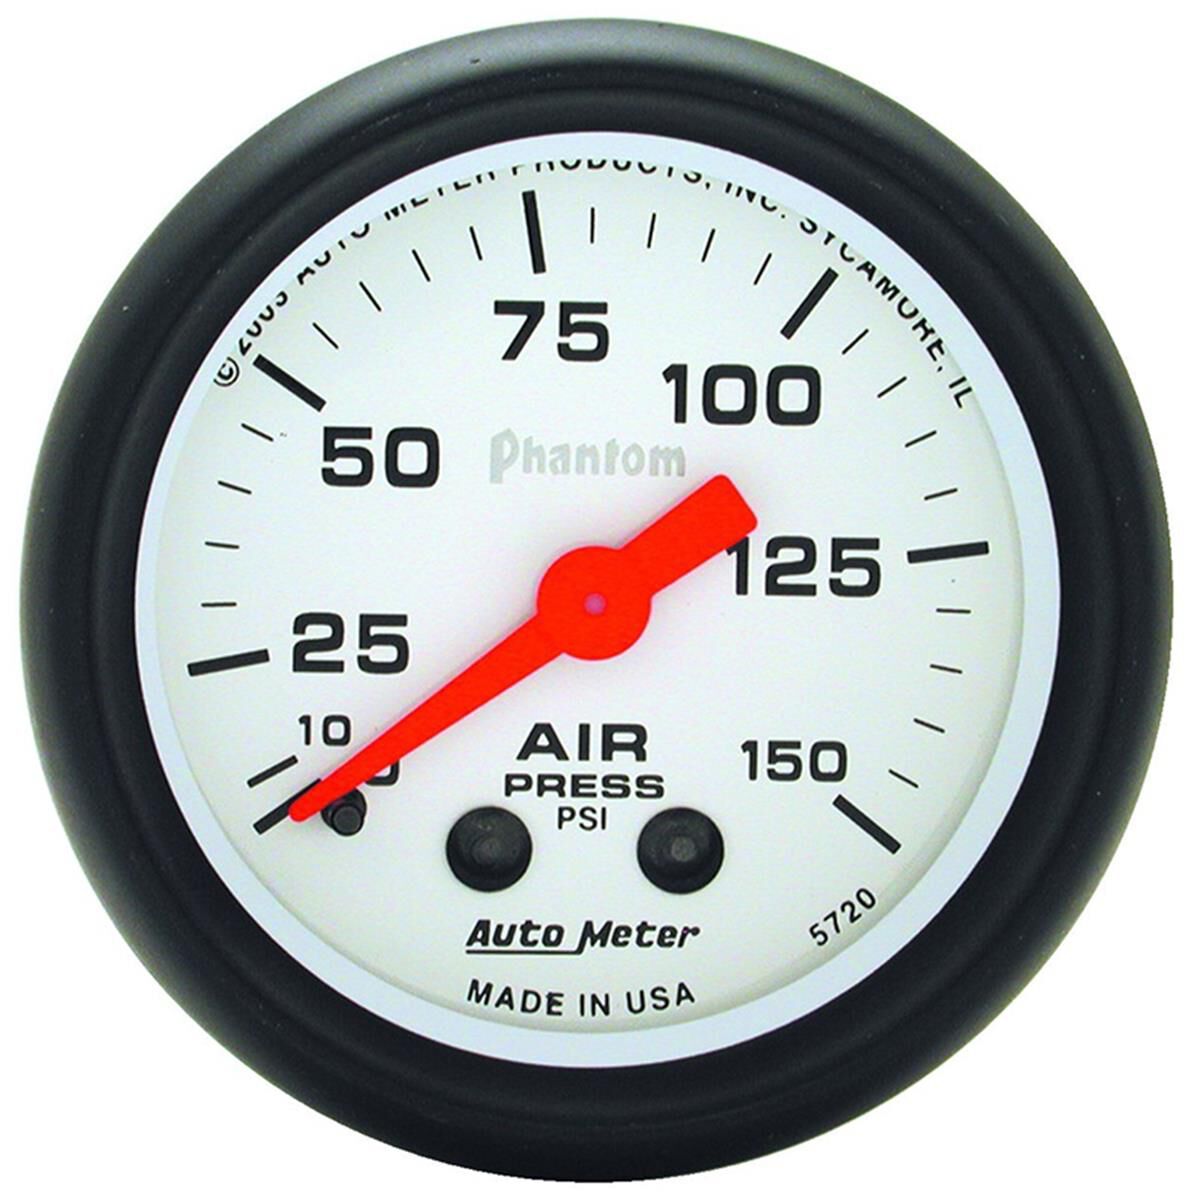 Autometer 2620 2 AIR PRESS MECH Z-SERIES 0-150 PSI 